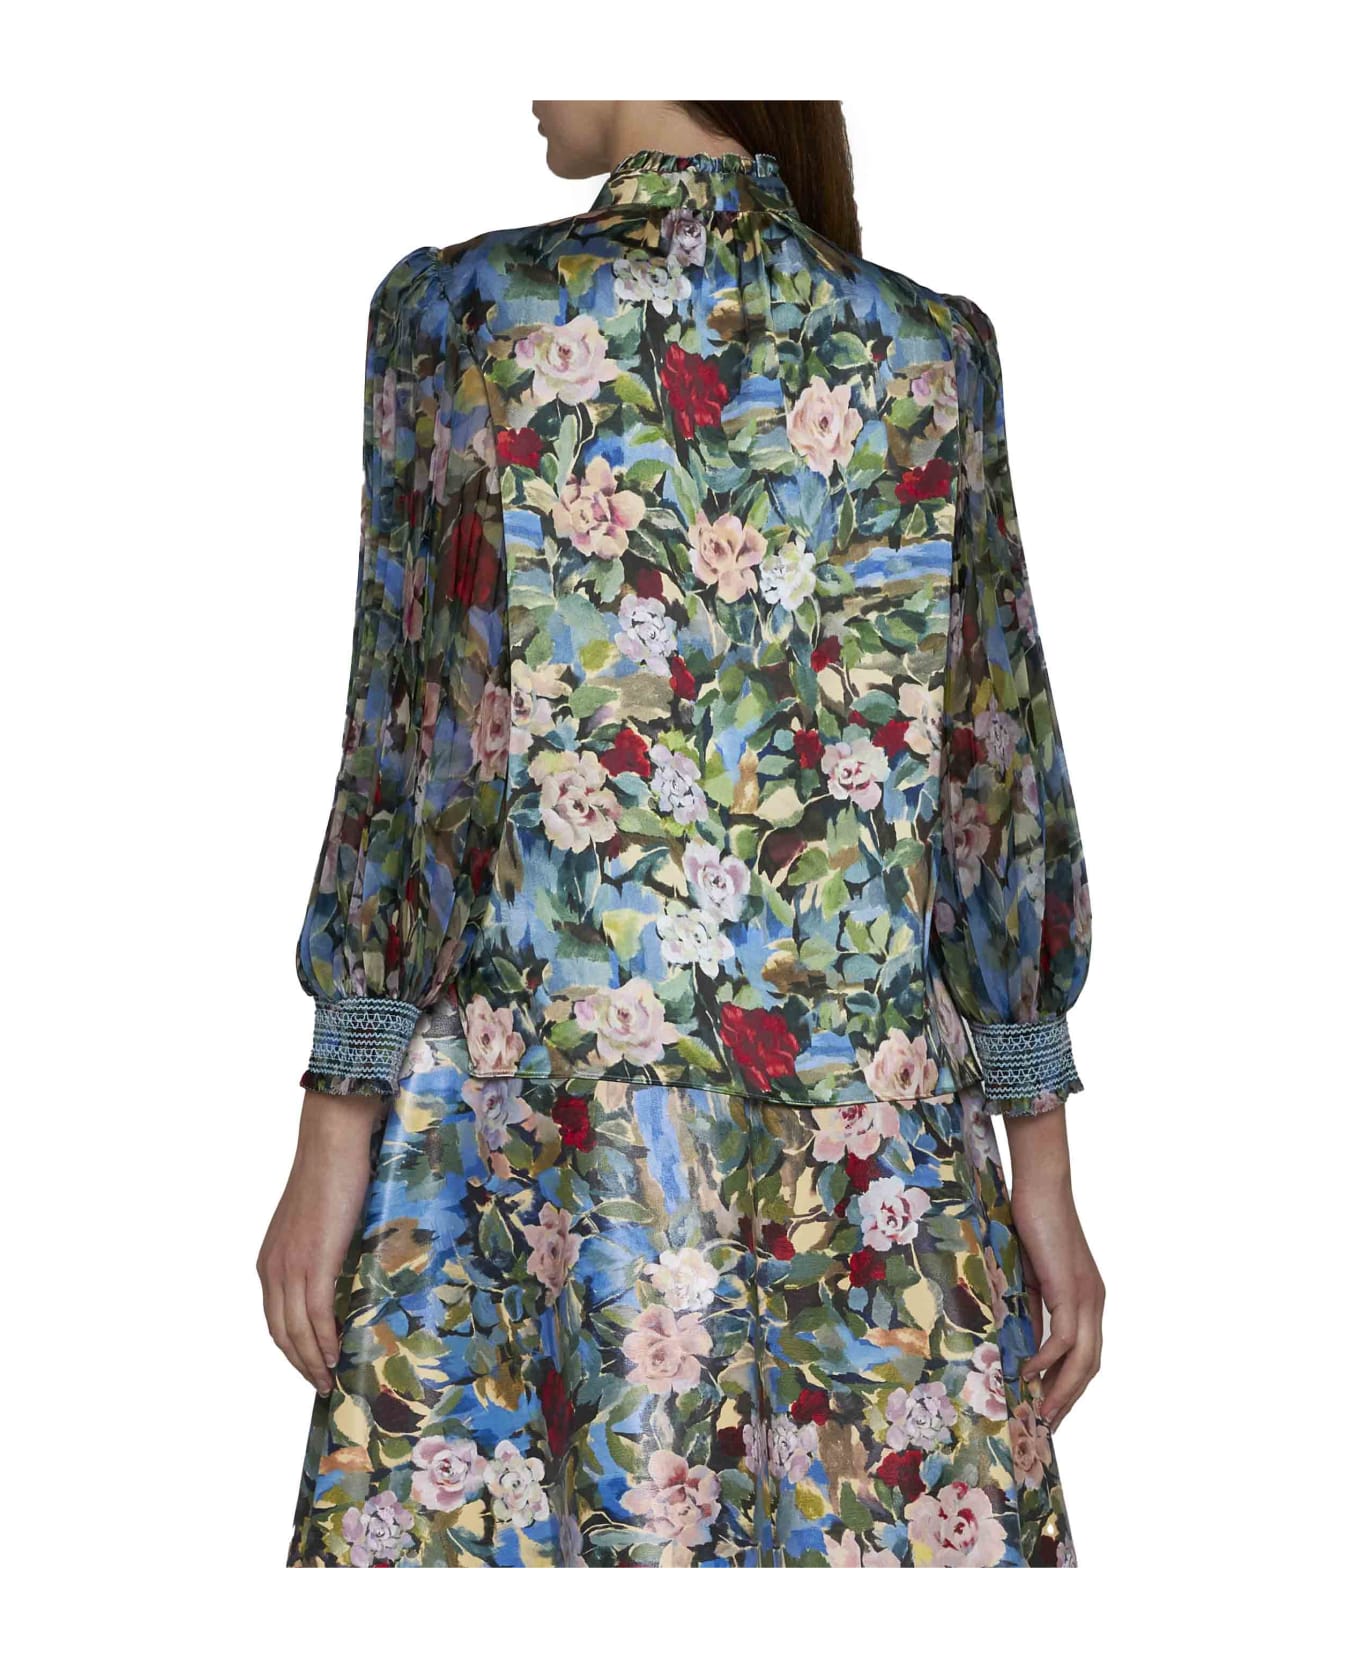 Alice + Olivia Shirt - Breeze floral sm